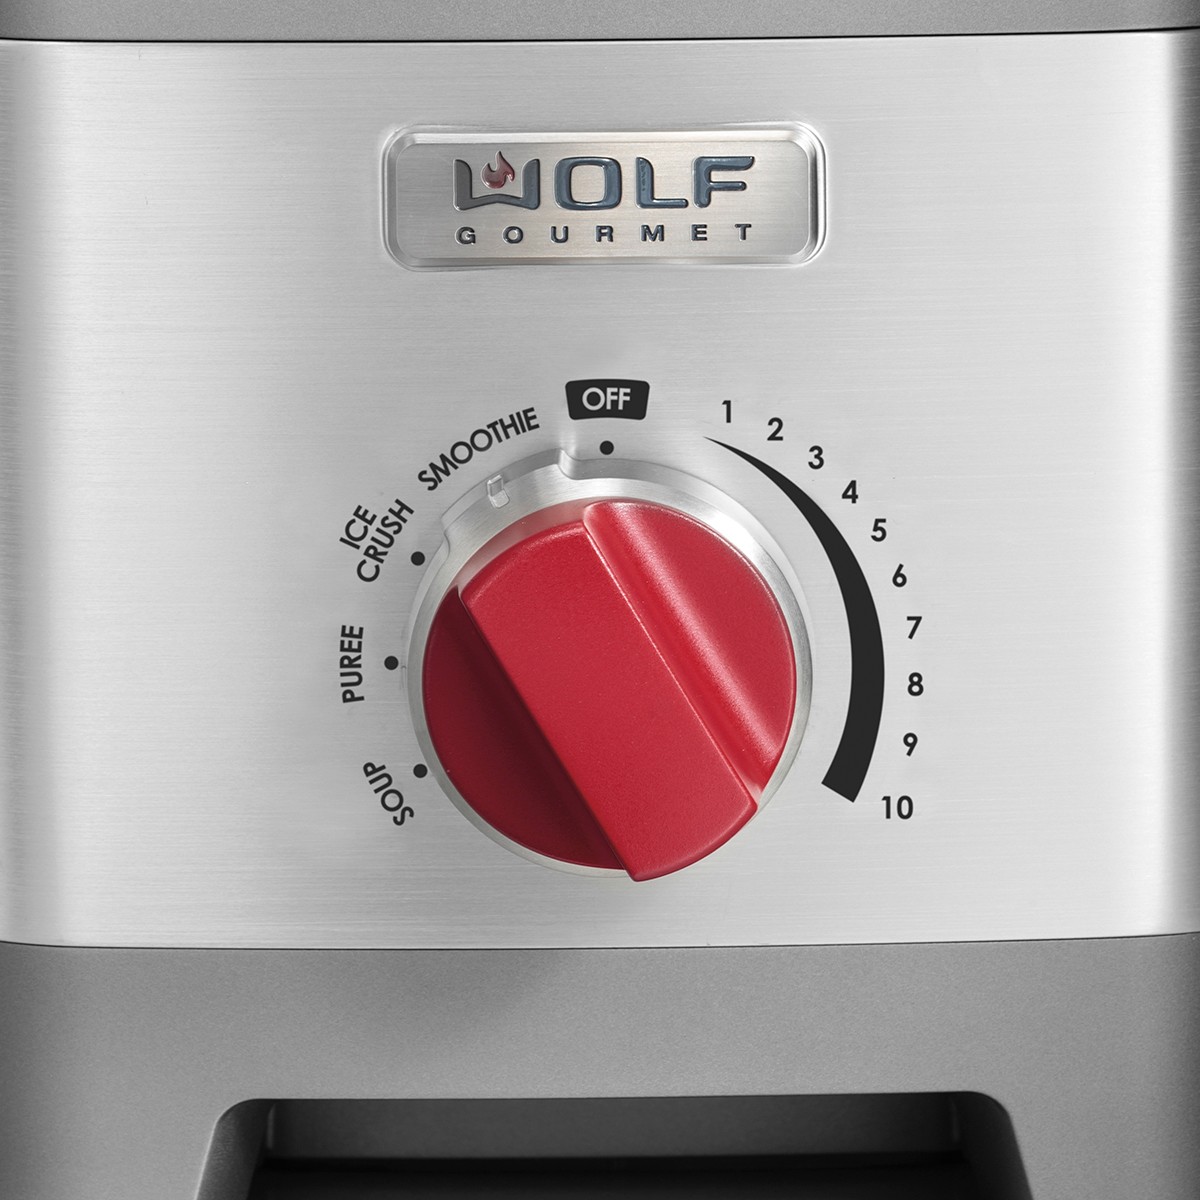 Wolf Gourmet 2-Slice Toaster